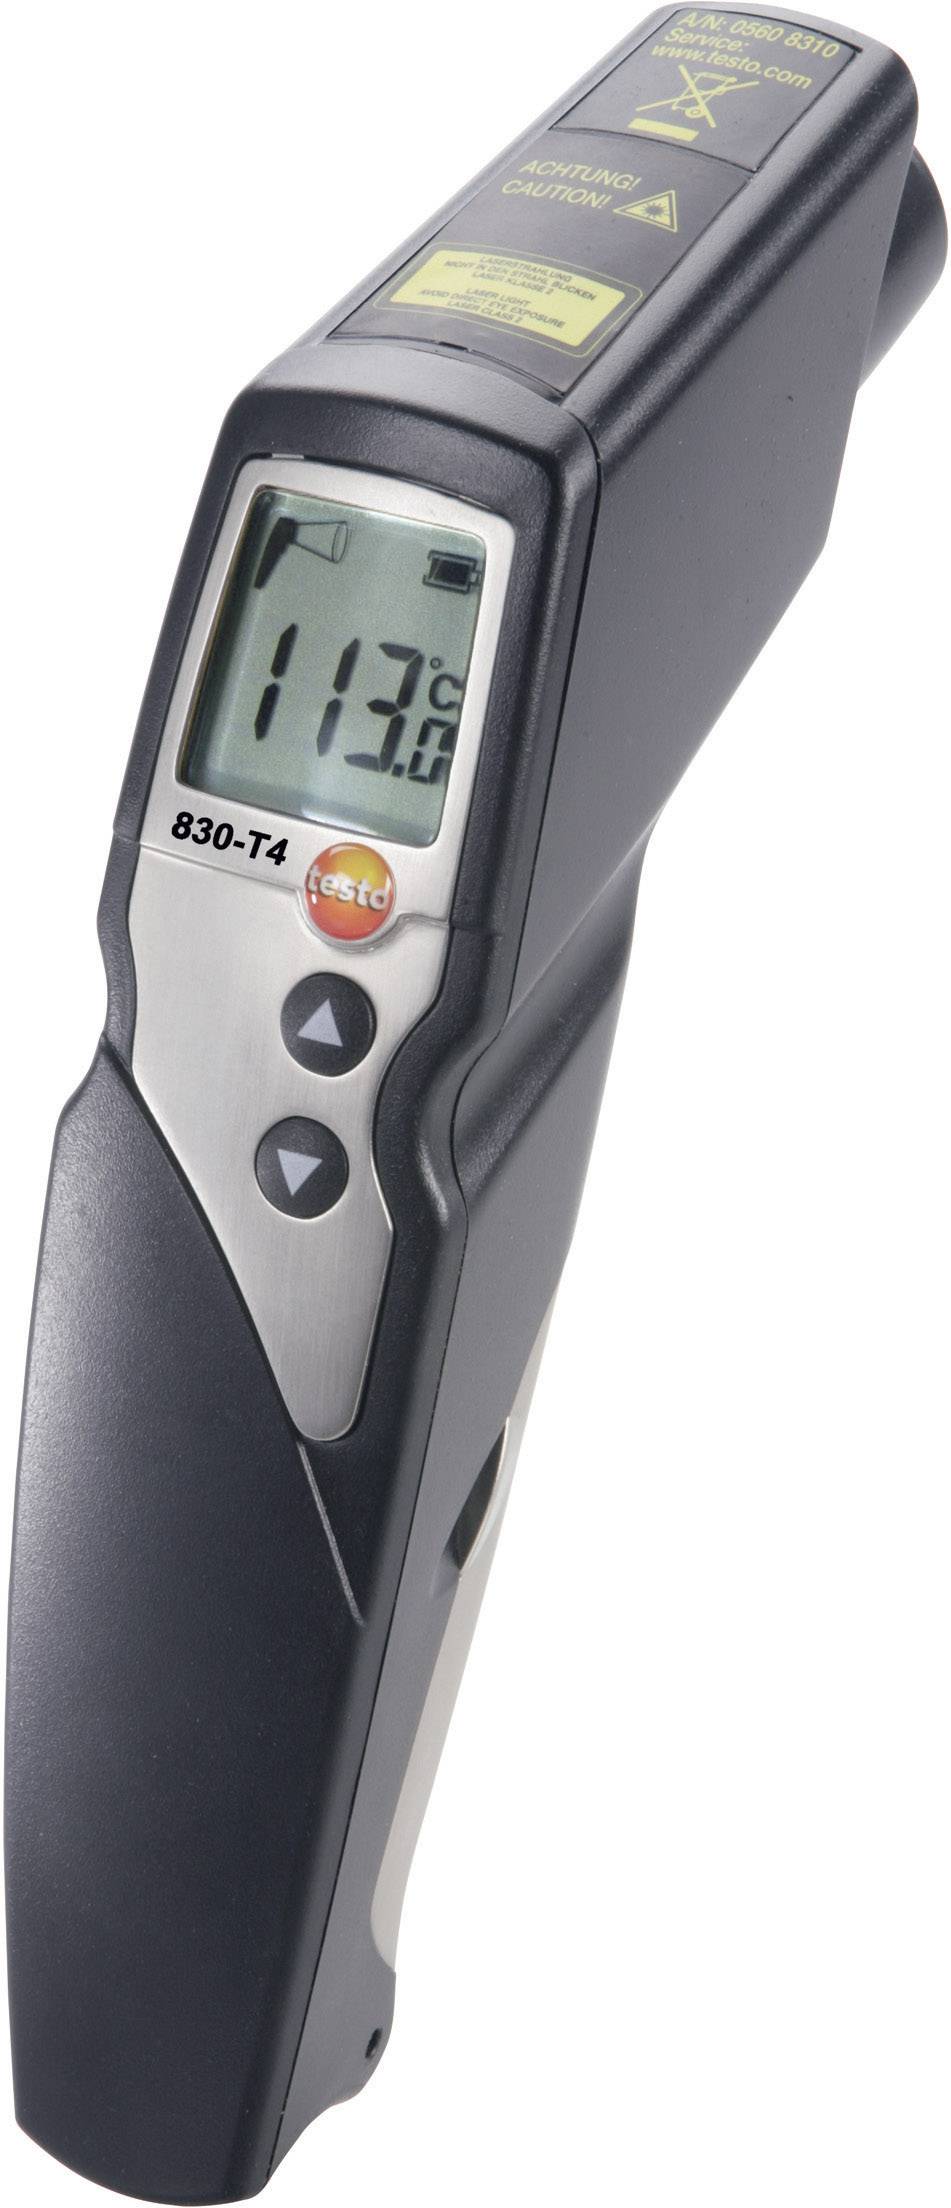 testo 830-T4 Infrarot-Thermometer Optik 30:1 -30 - +400 °C Kontaktmessung  kaufen